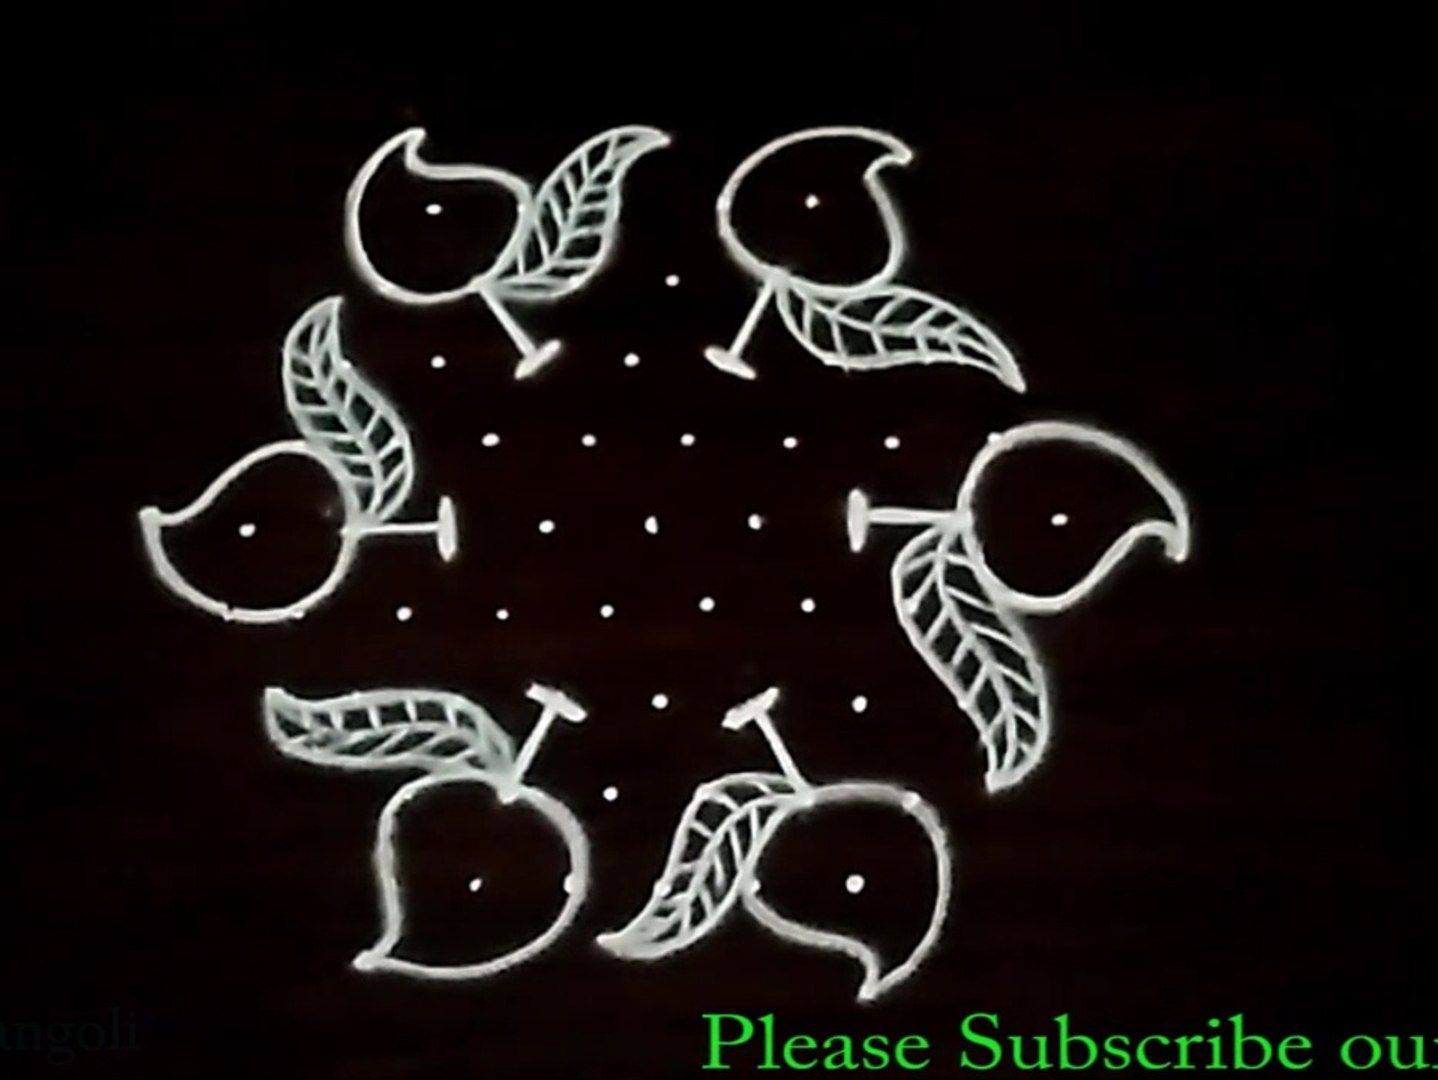 ugadi rangoli design with 9 dots - ఉగాది ముగ్గులు -Telugu new year rangoli  - Gudi padwa rangoli designs - video Dailymotion